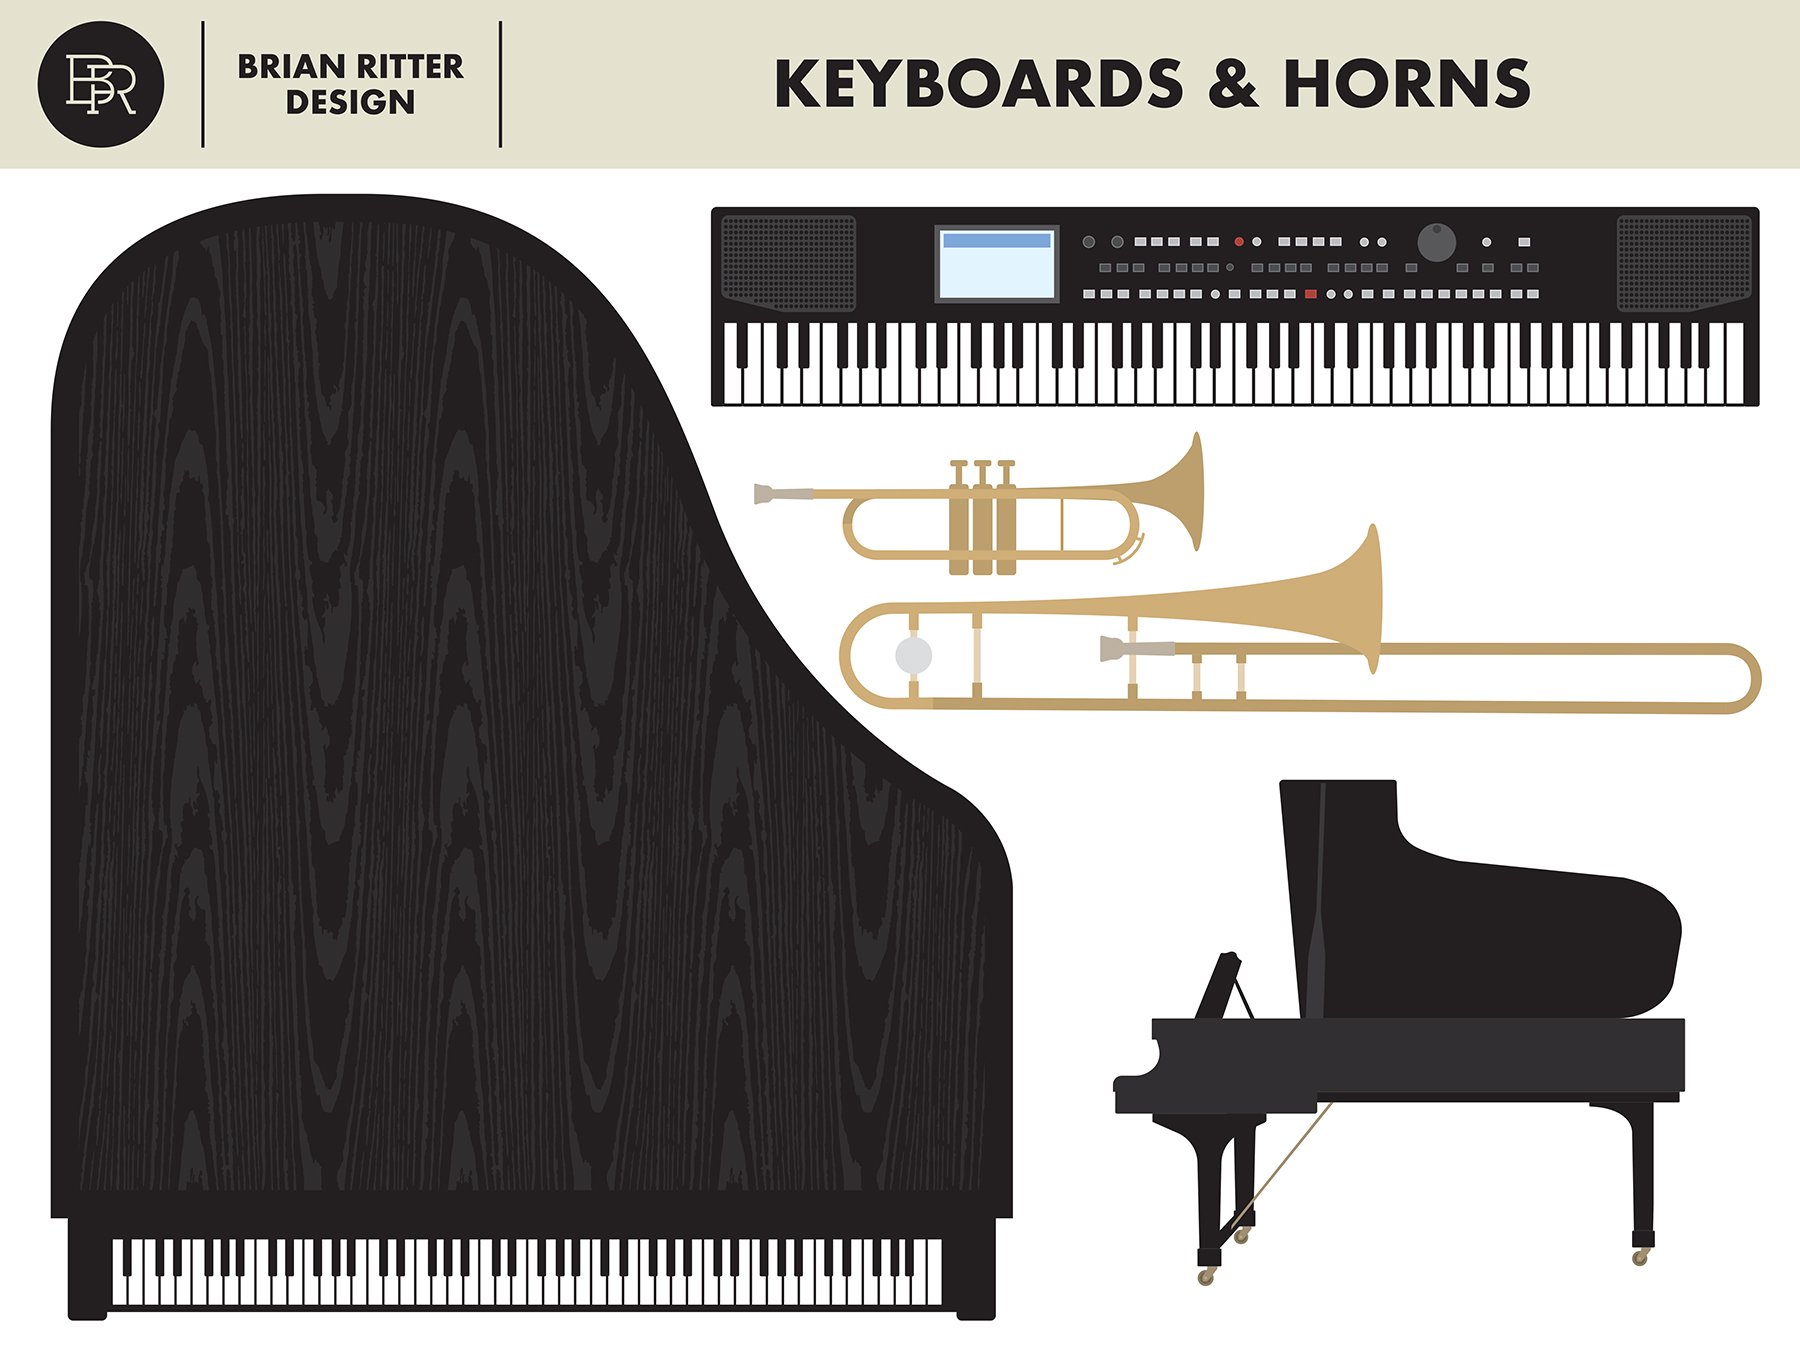 Keyboards and horns illustration.